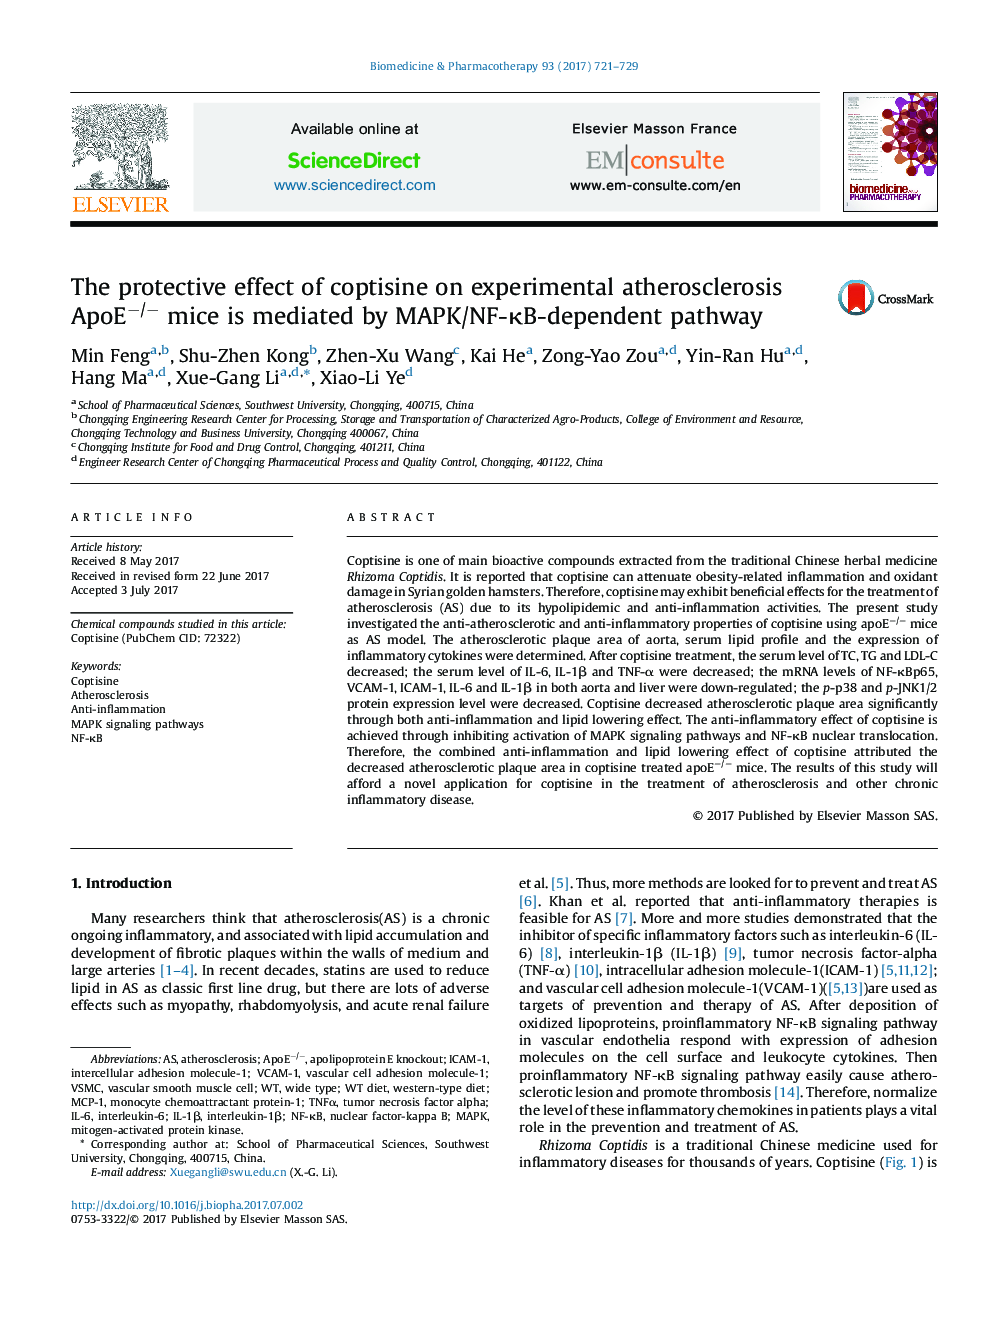 The protective effect of coptisine on experimental atherosclerosis ApoEâ/â mice is mediated by MAPK/NF-ÎºB-dependent pathway